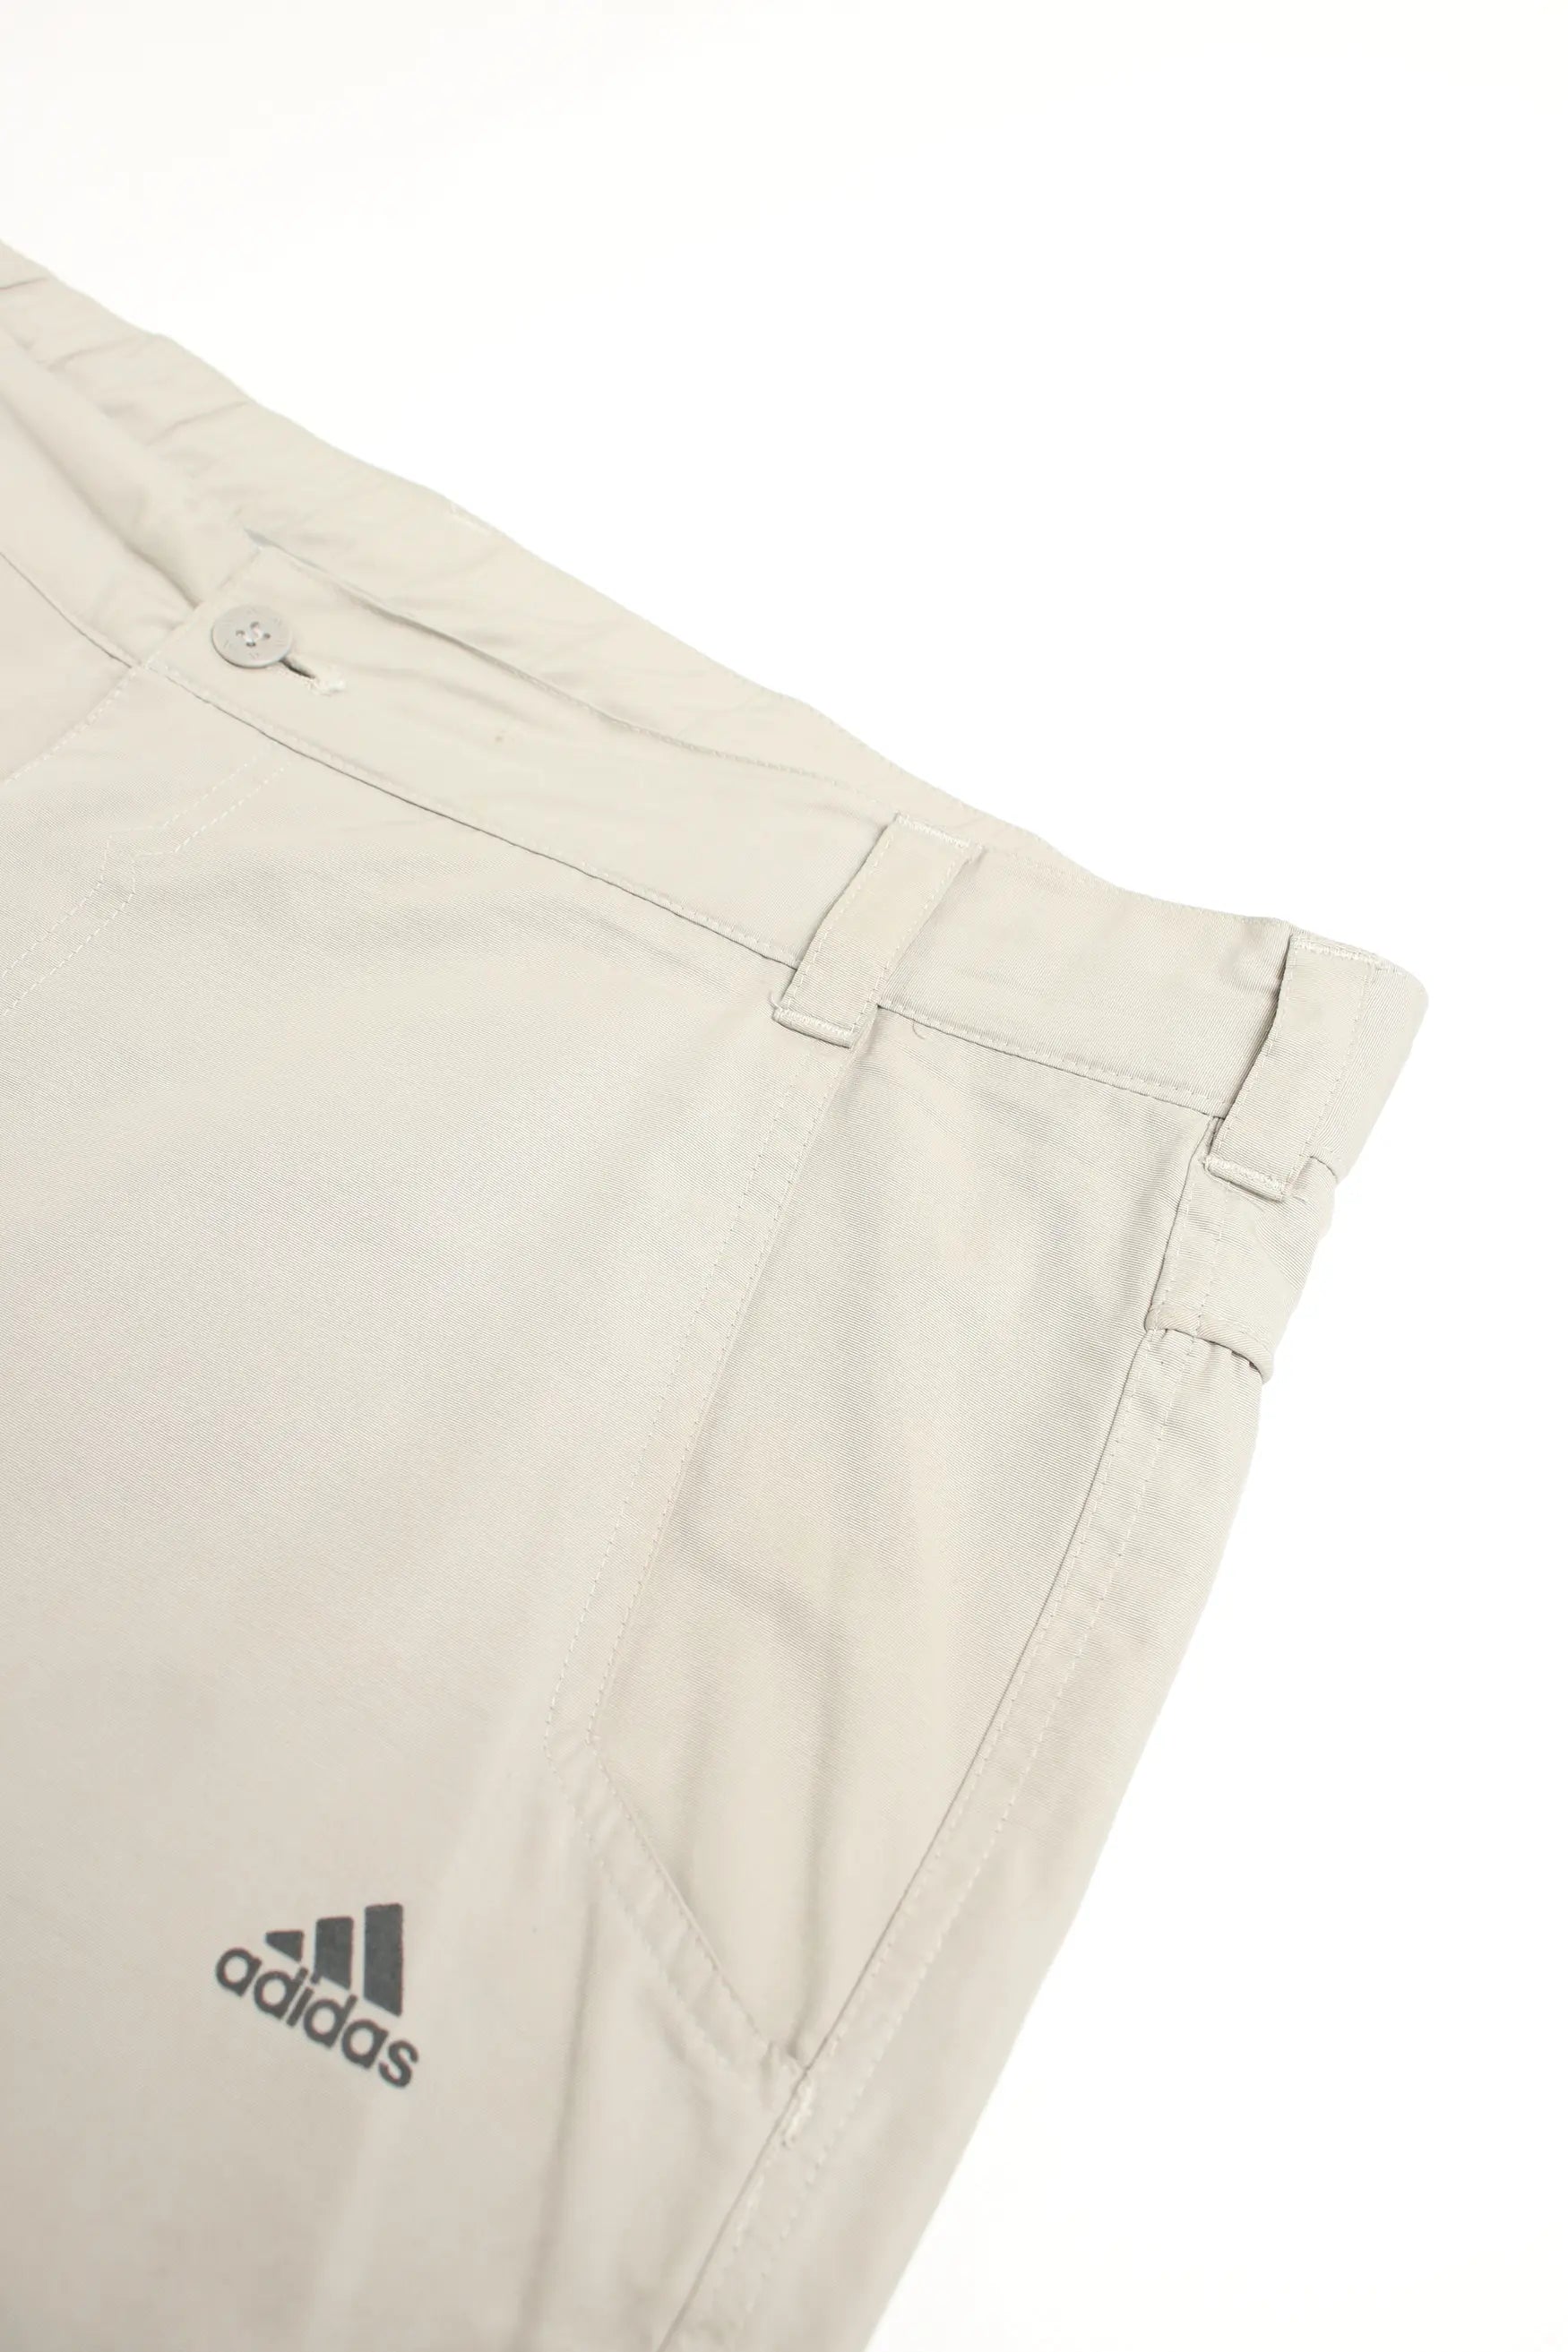 Adidas '08 Joint Holster Pants